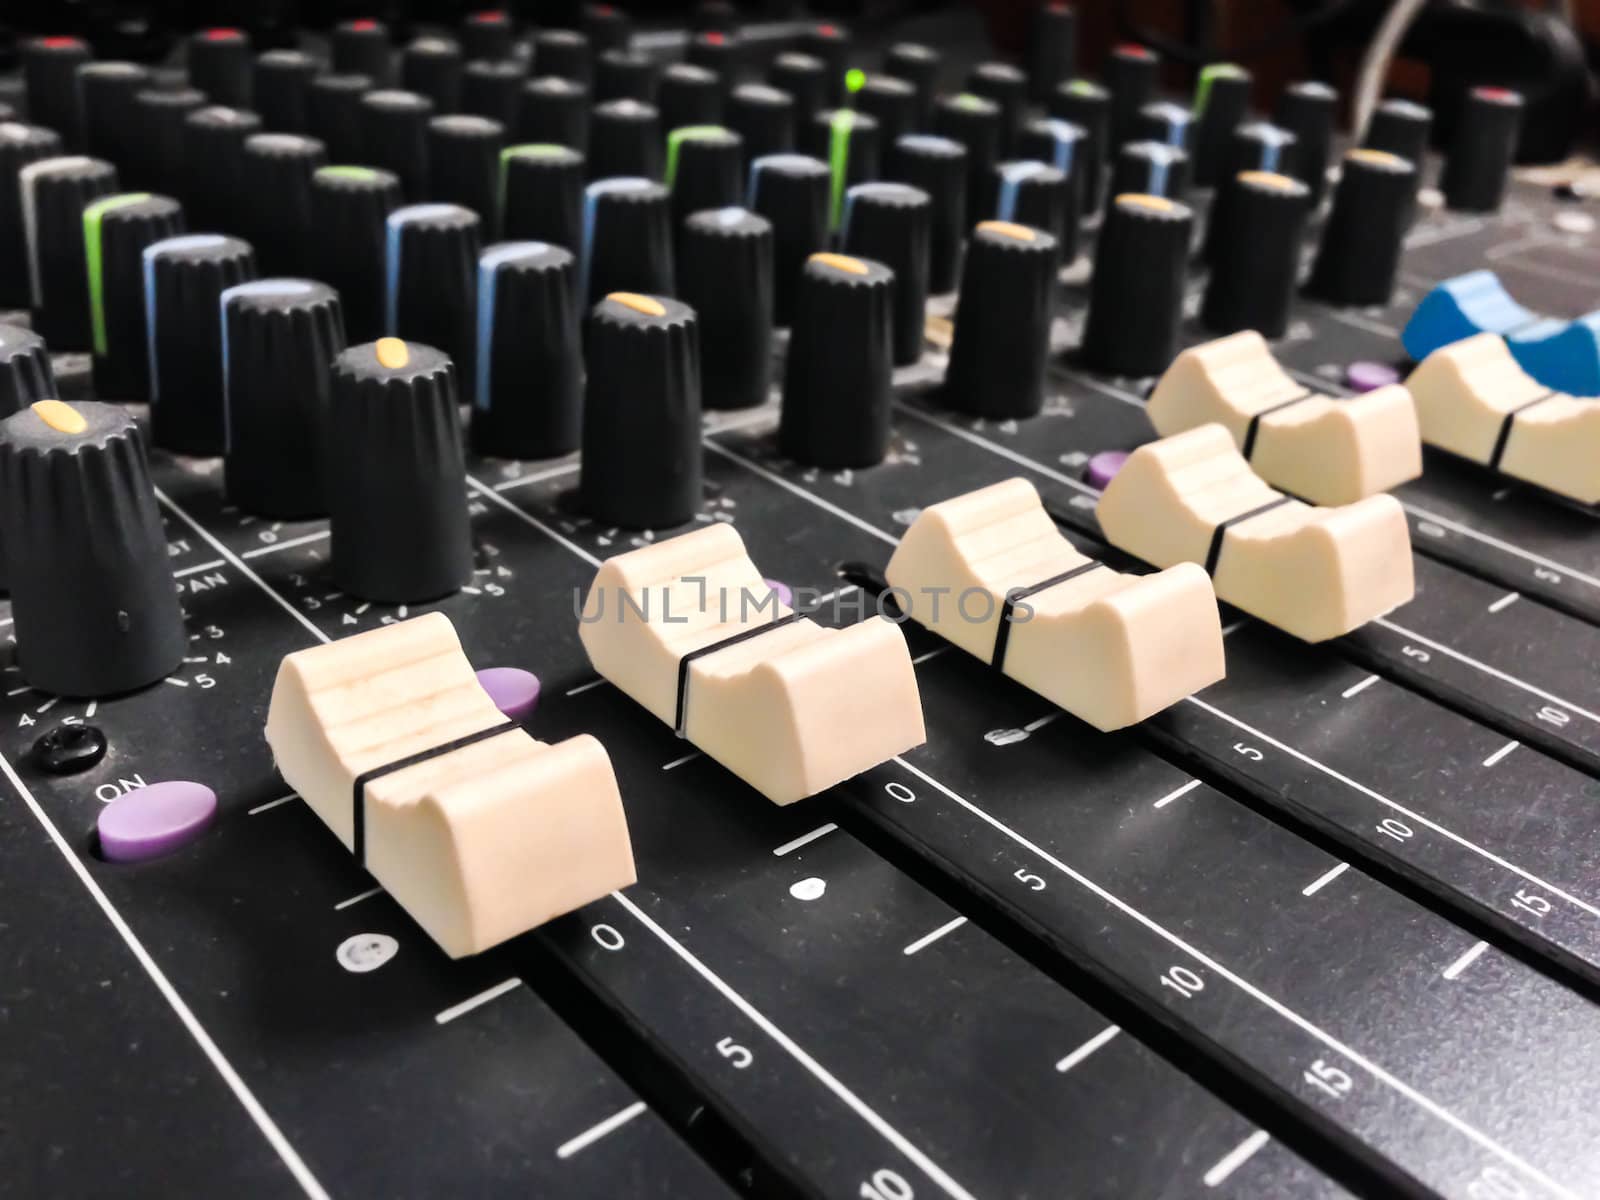 Electronic sound mixer equipment close-up